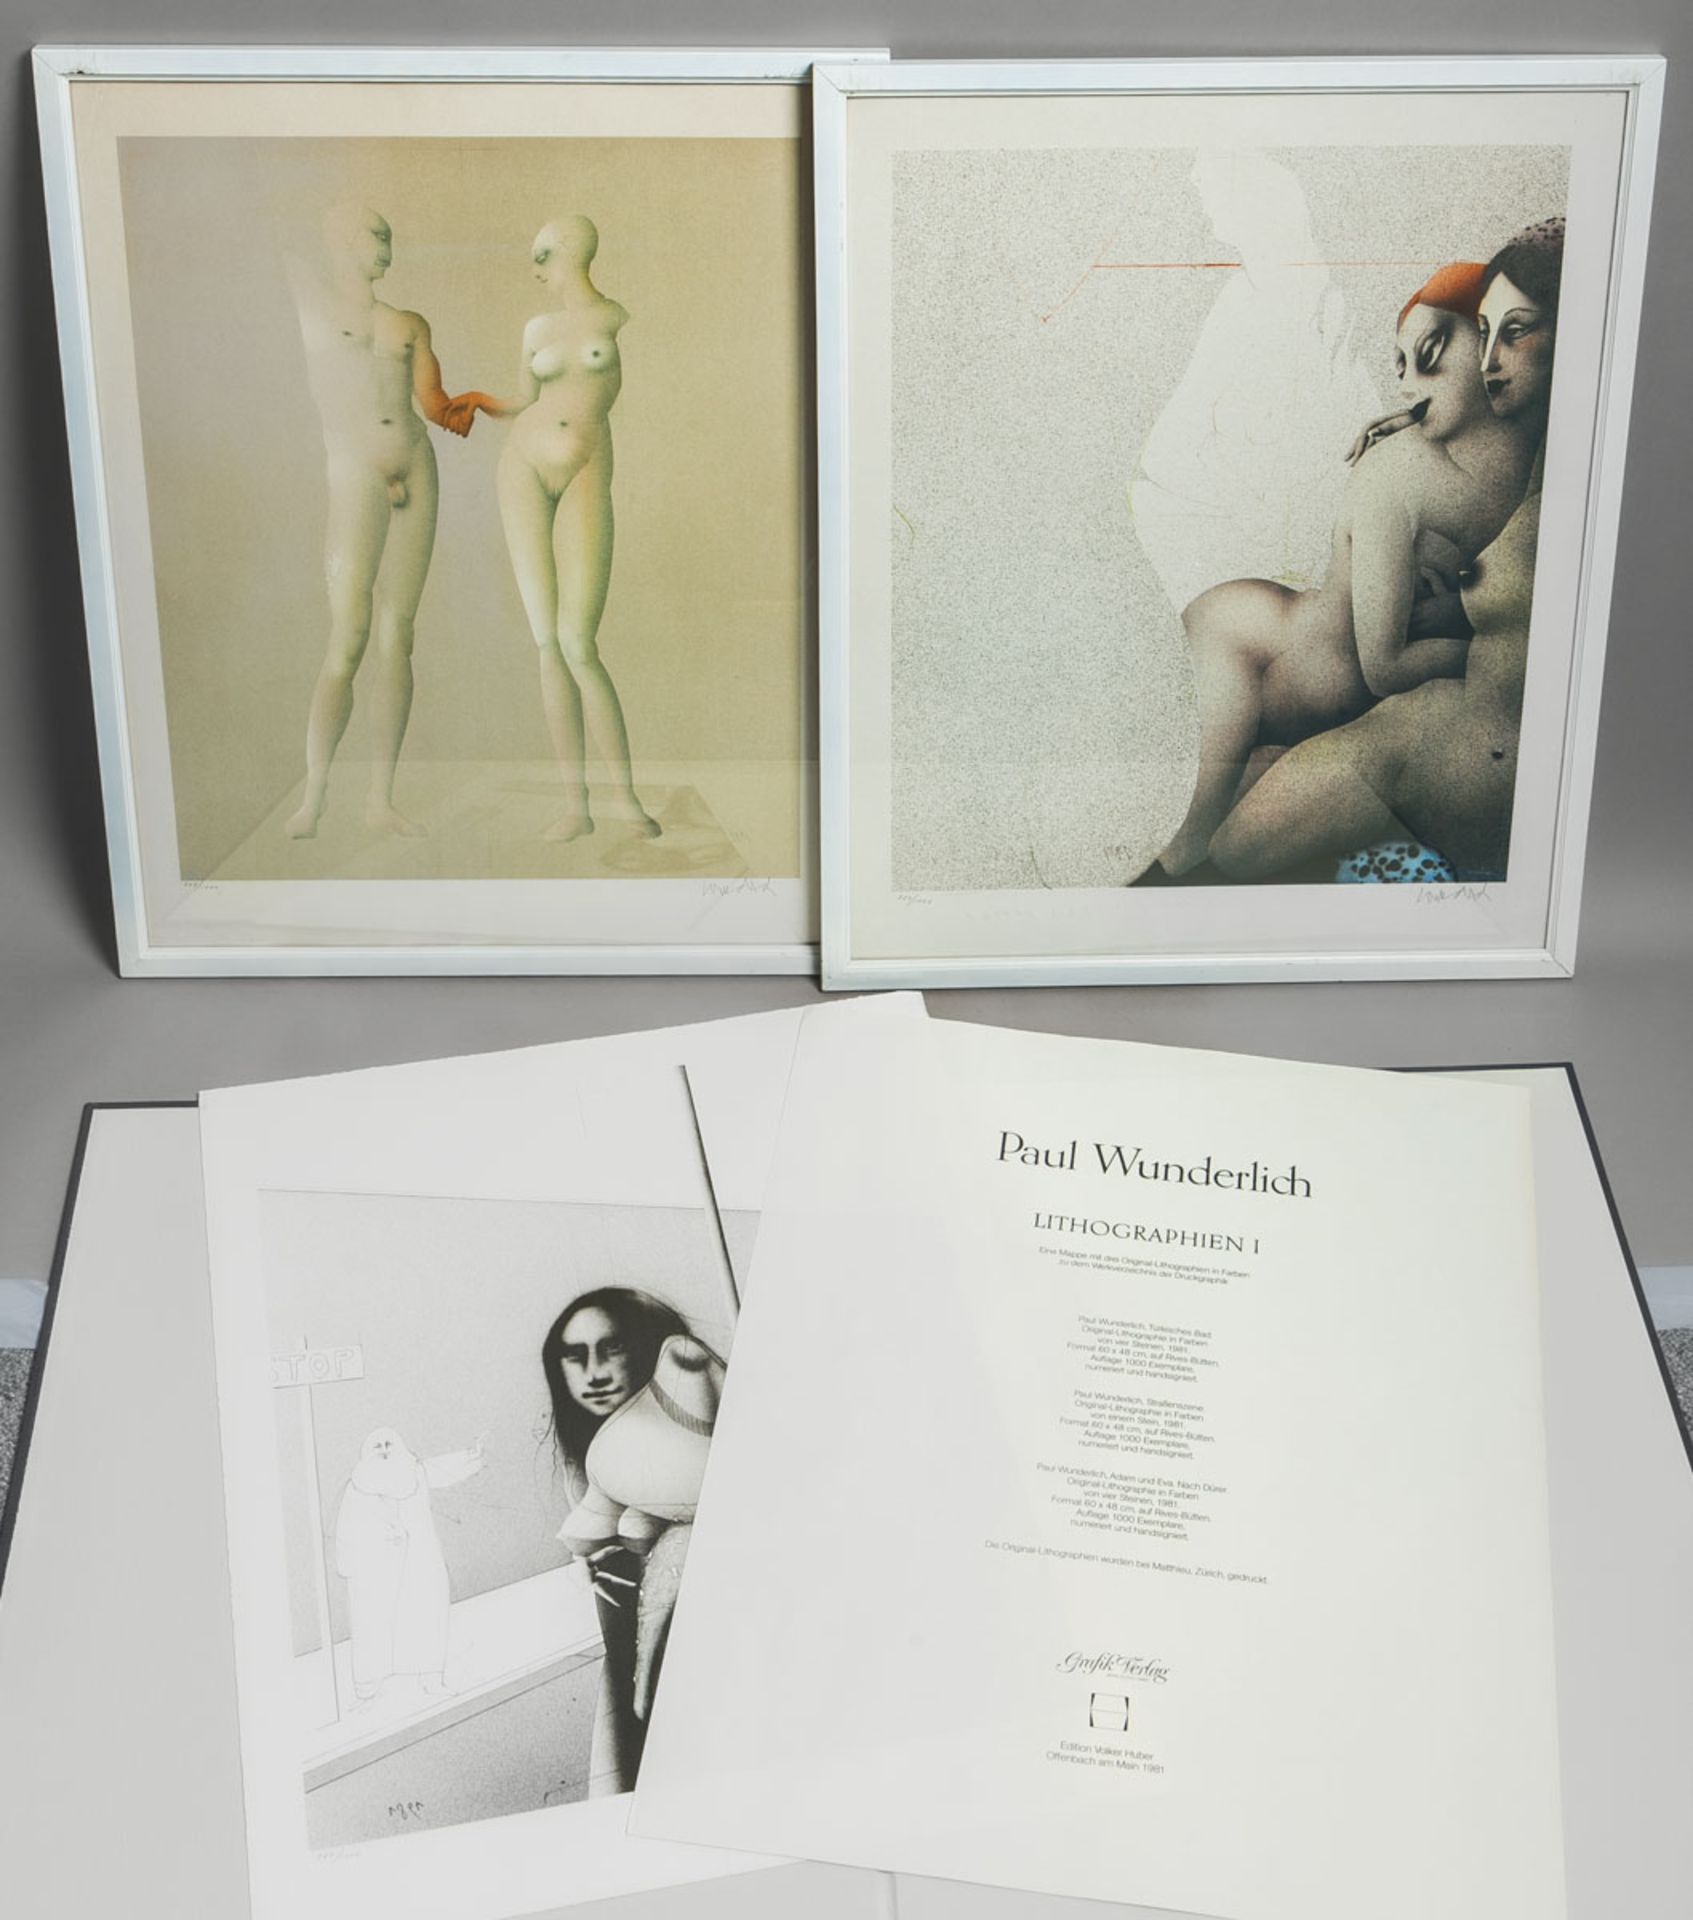 Wunderlich, Paul (1927 - 2010), Mappe mit 3 Lithografien "Lithographien 1" (1981)